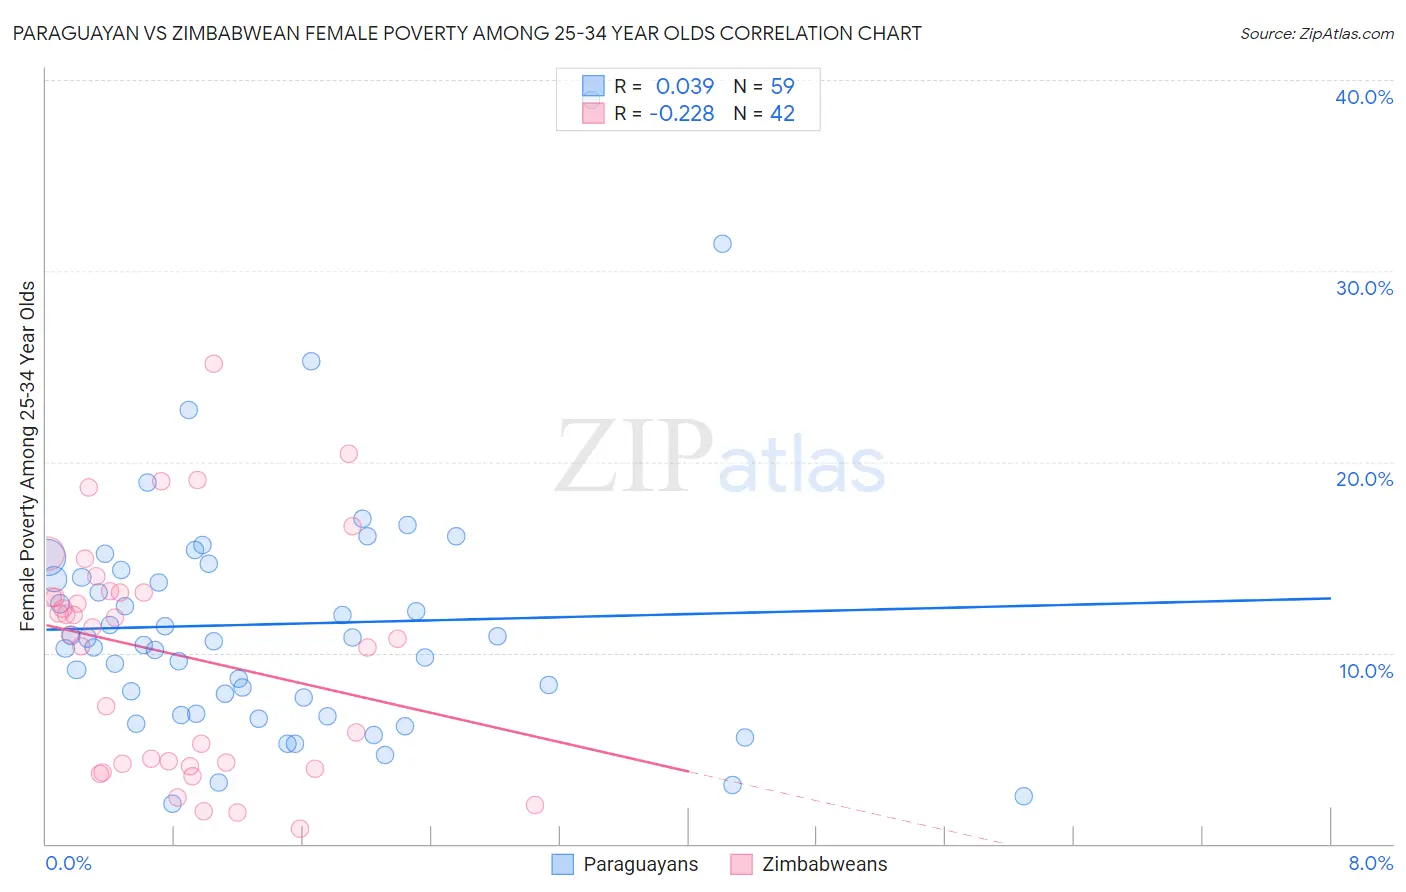 Paraguayan vs Zimbabwean Female Poverty Among 25-34 Year Olds